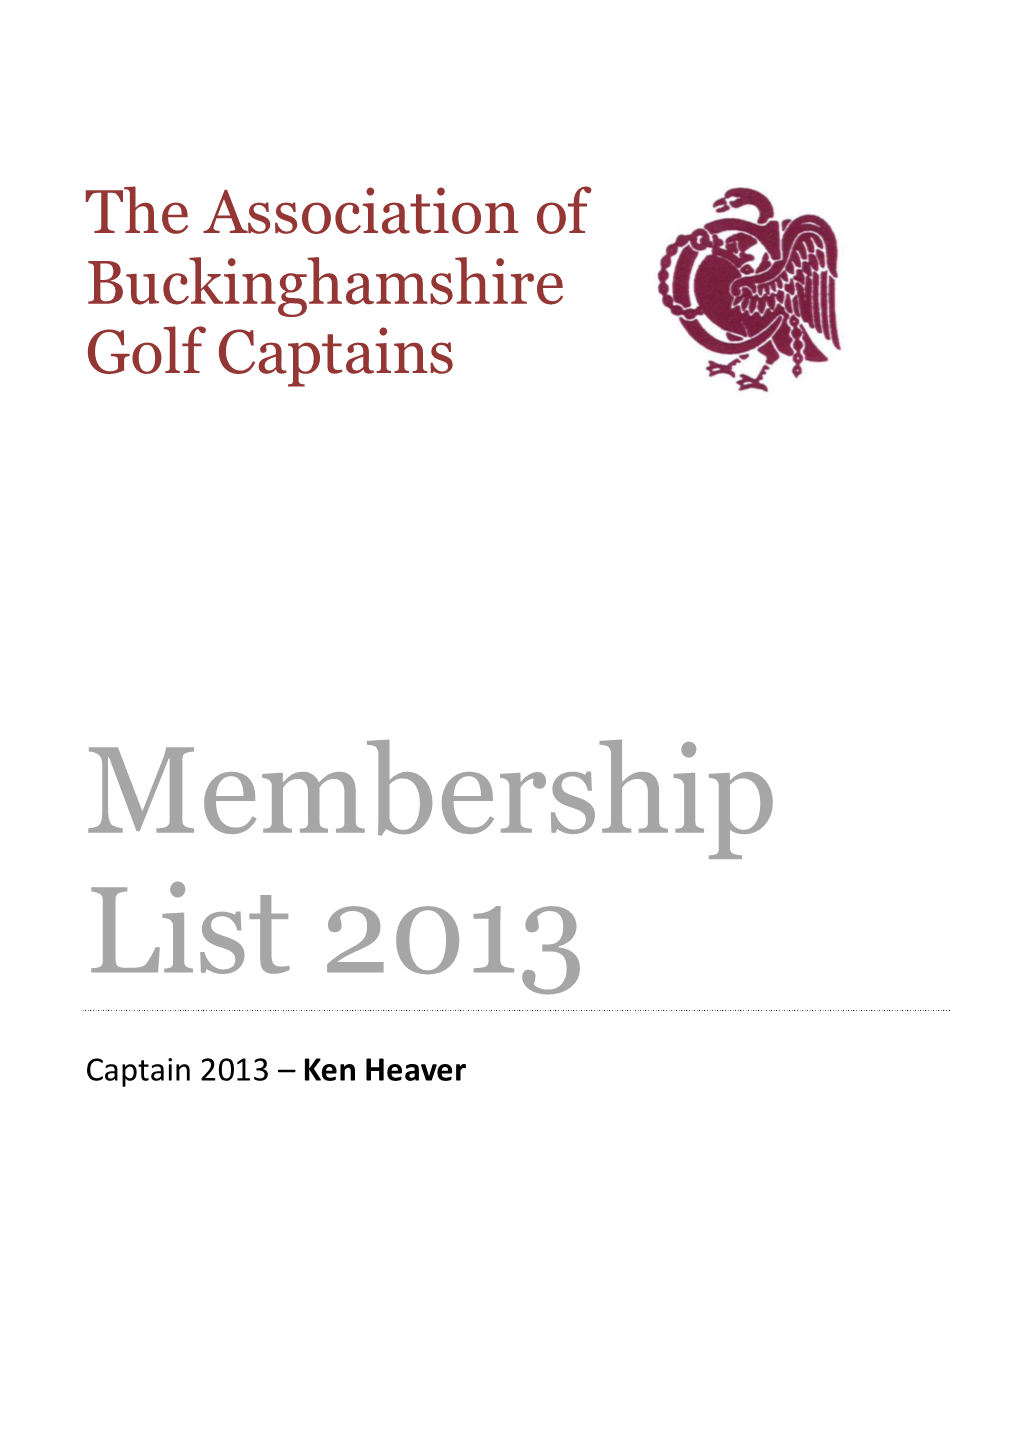 The Association of Buckinghamshire Golf Captains